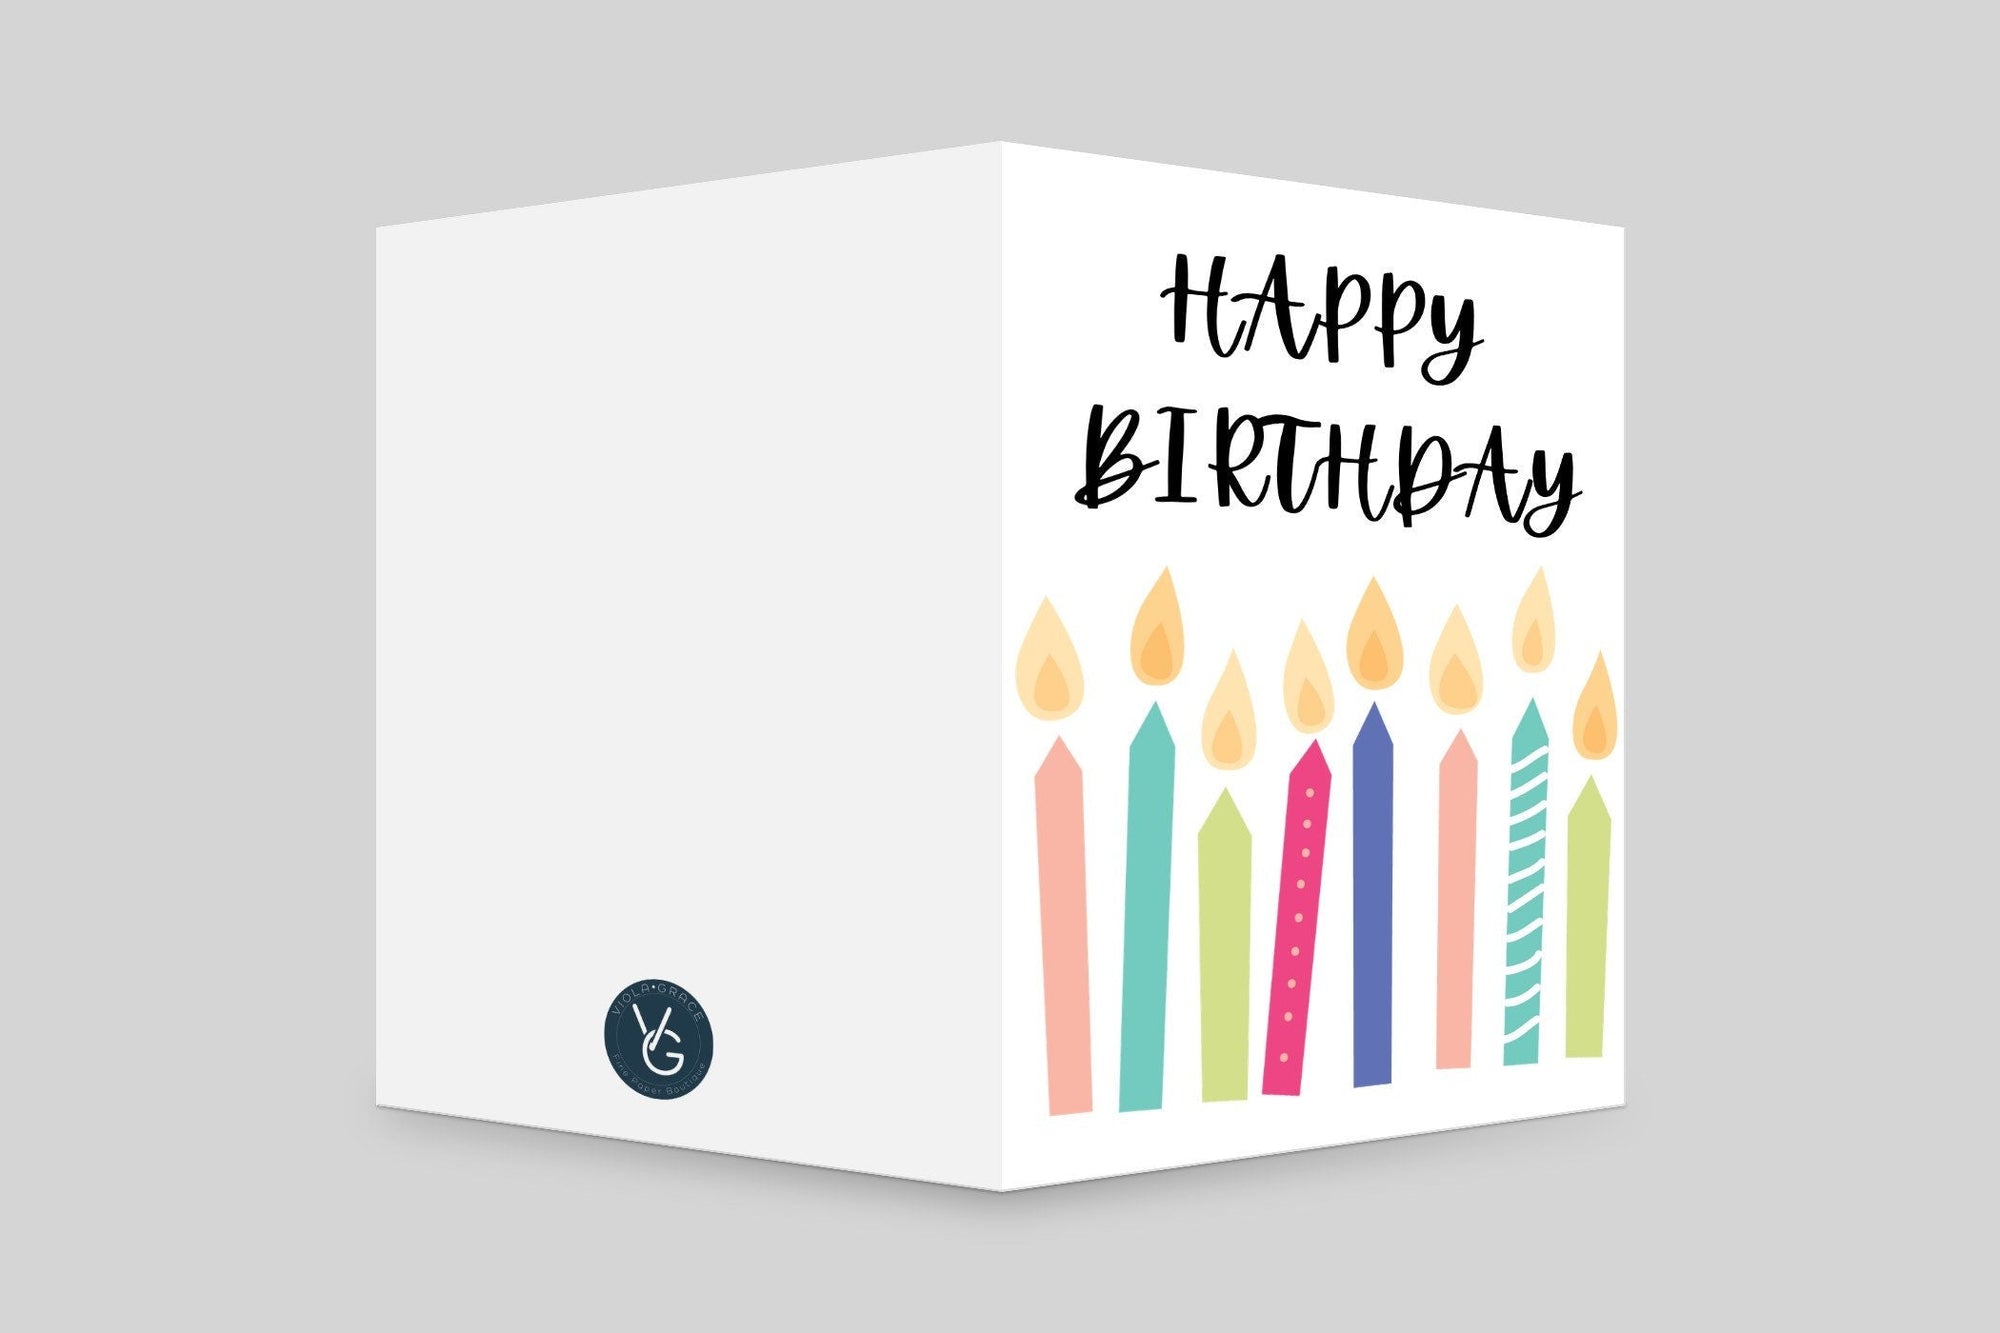 Happy Birthday Greeting Card Violagrace-174 